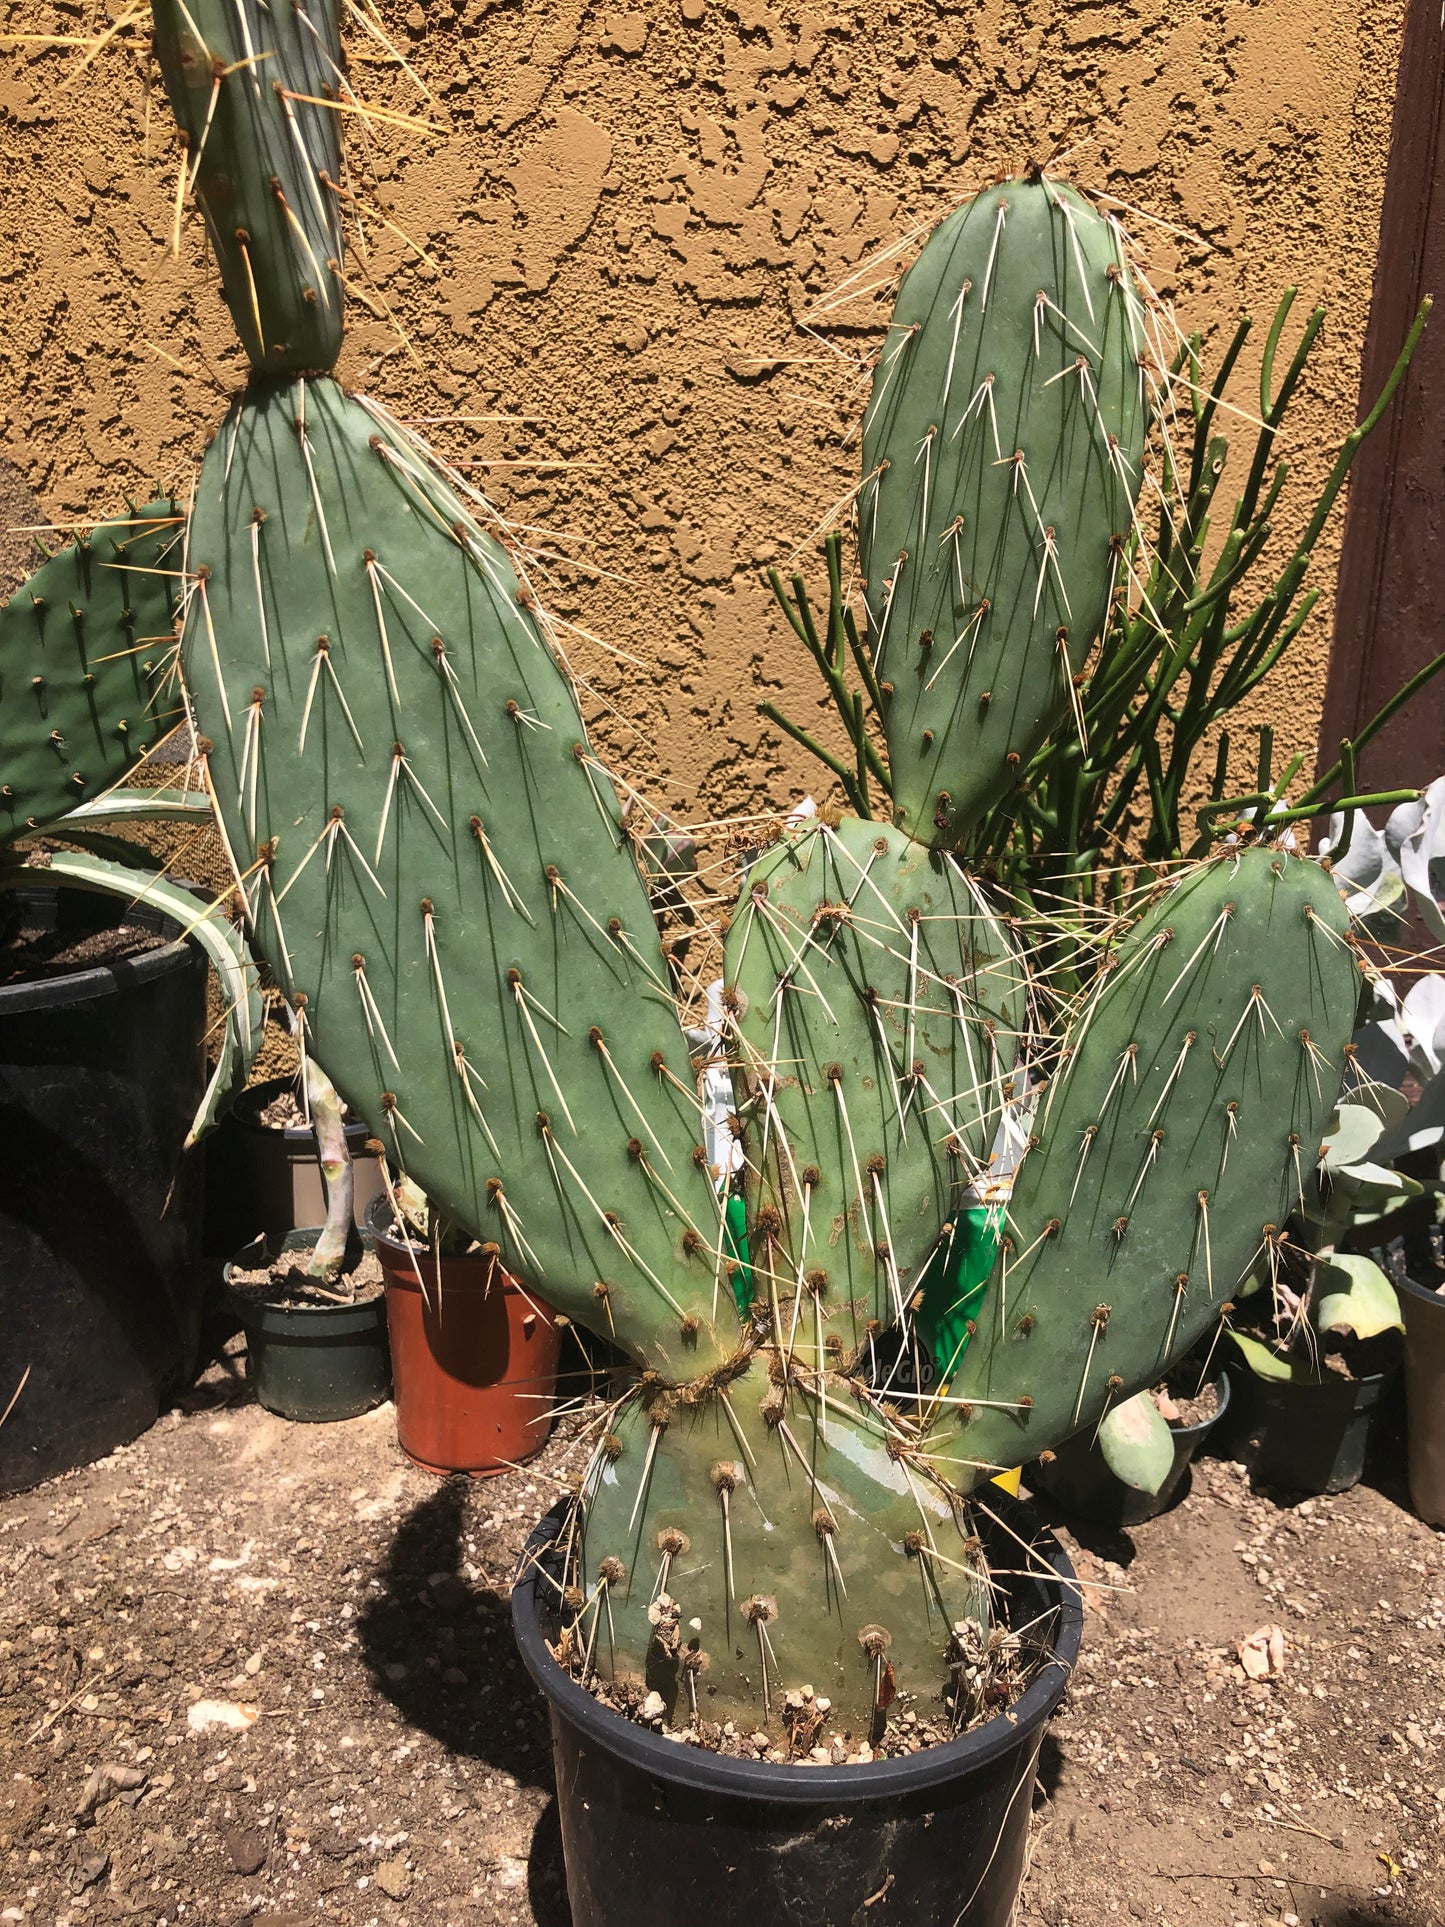 Opuntia engelmannii "Texas Prickly Pear" 20"Tall 12" Wide#200G